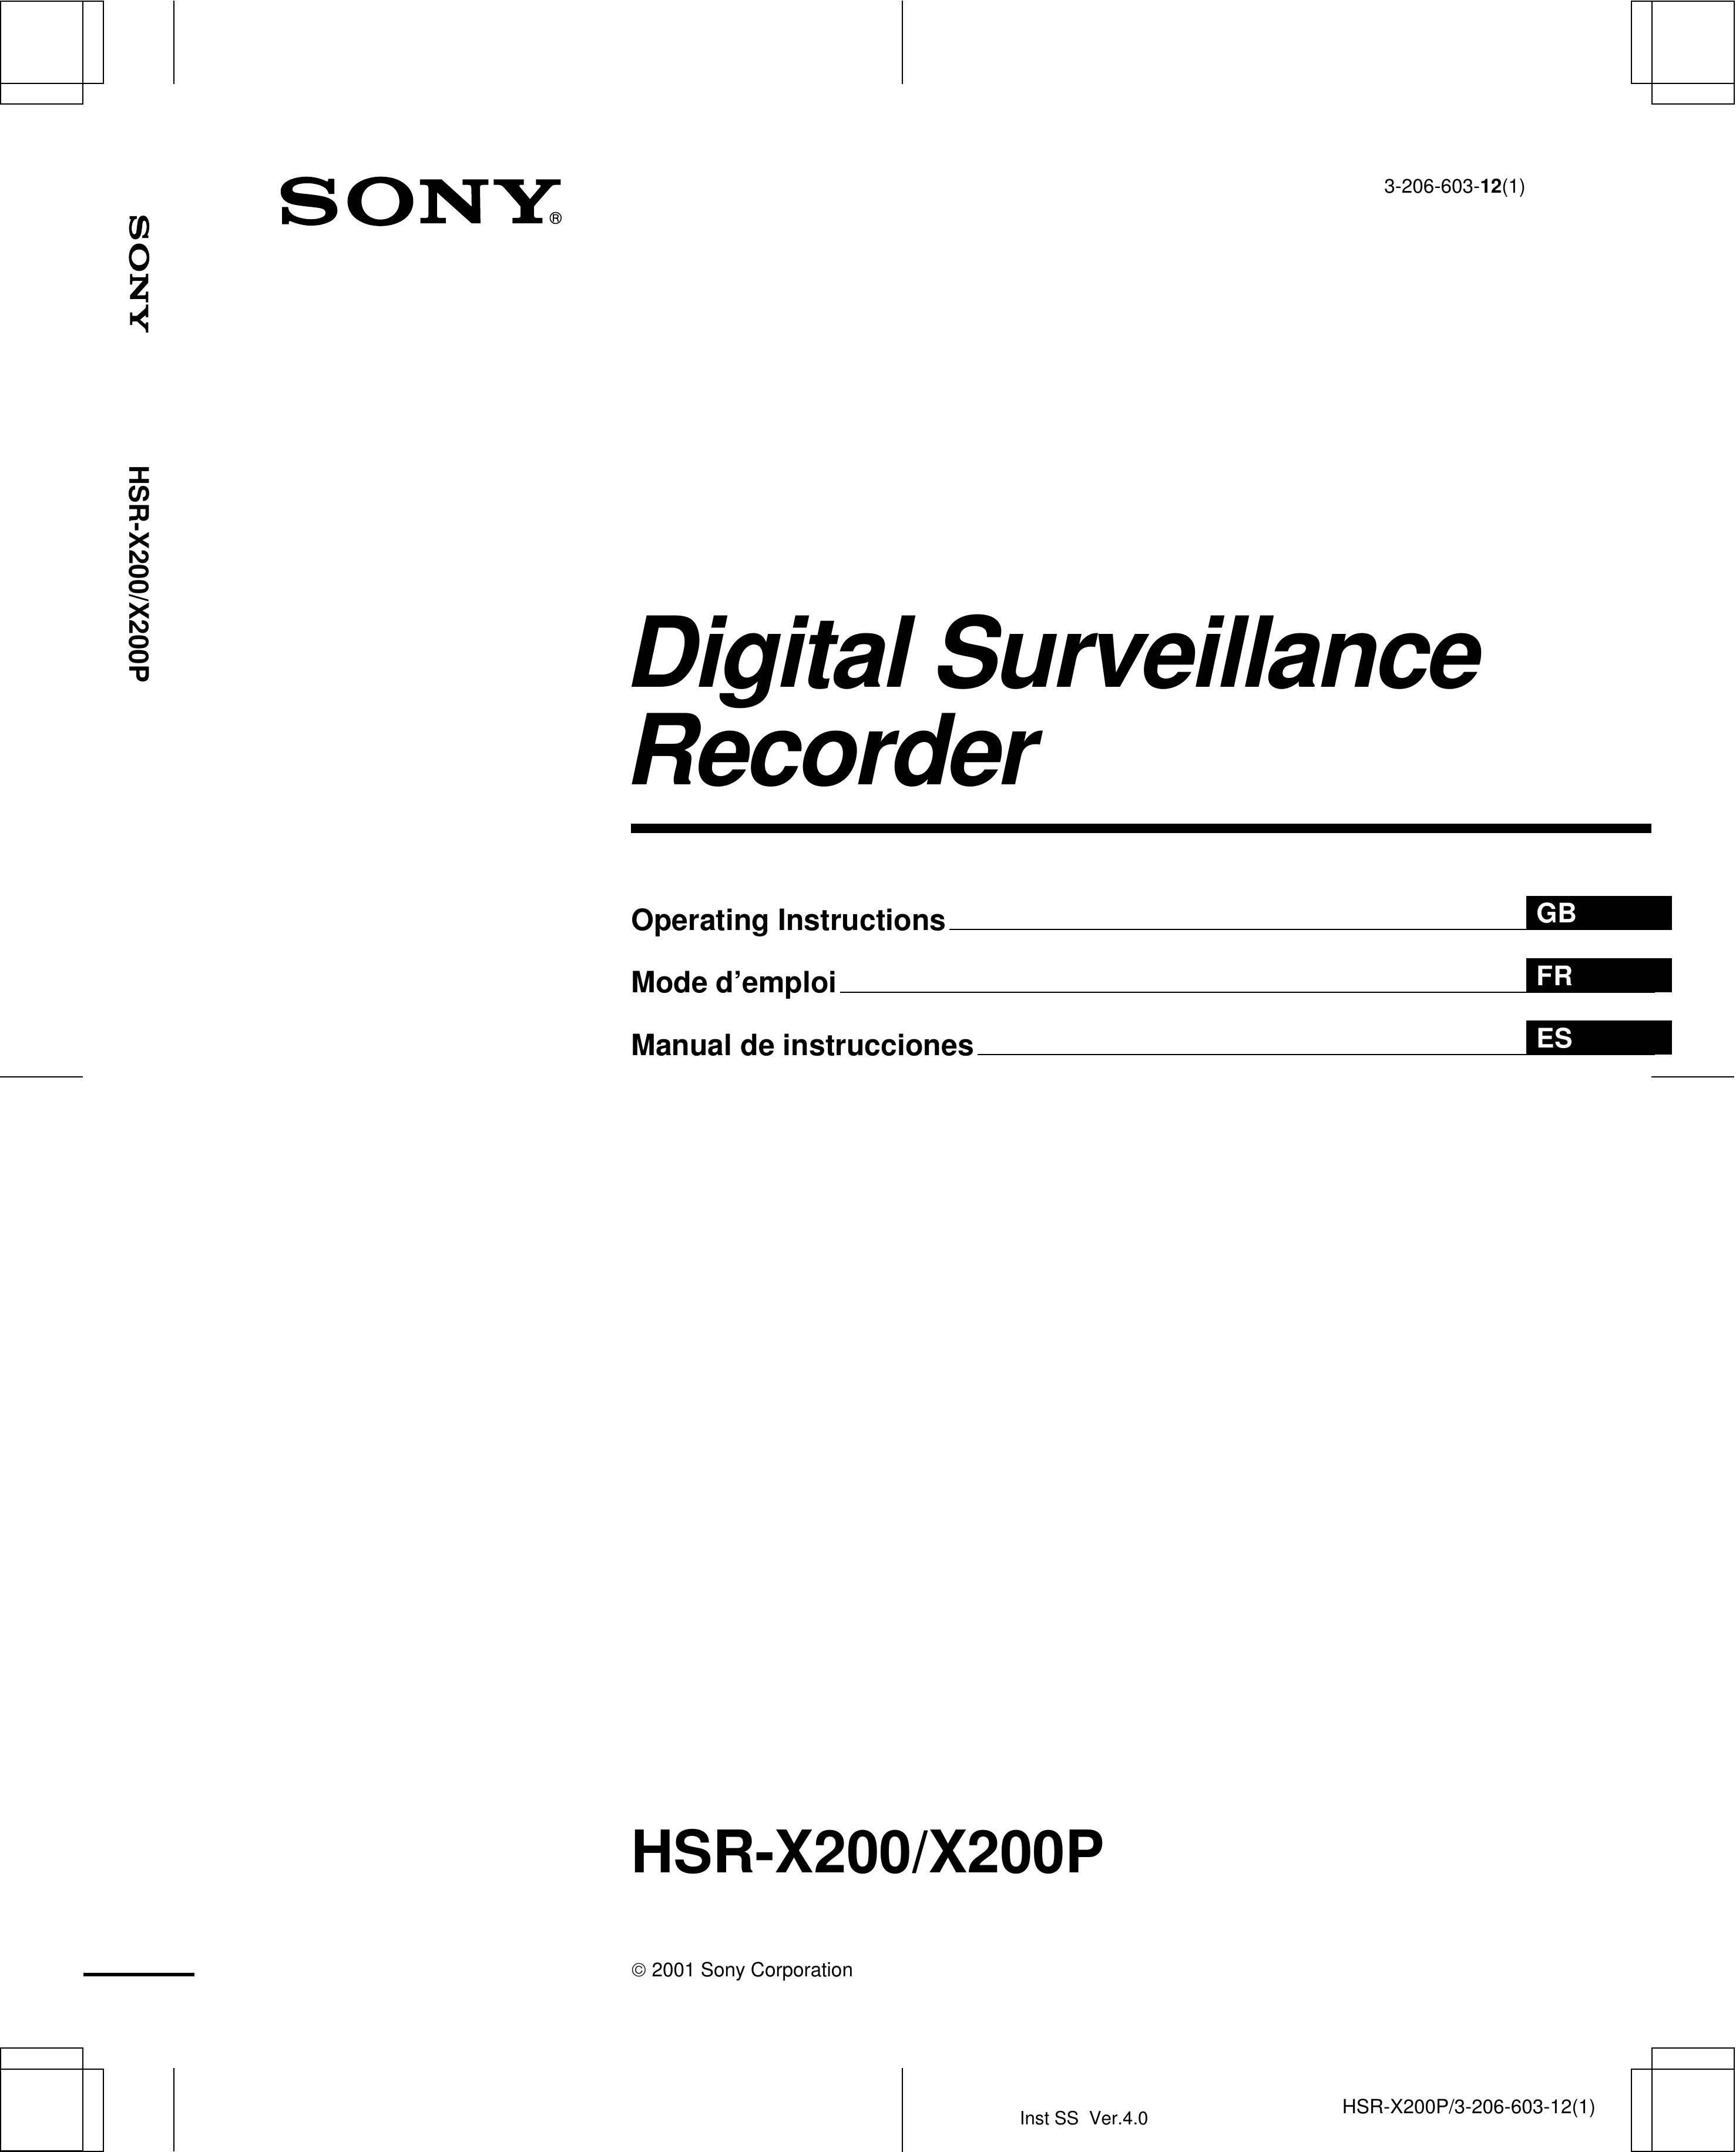 Sony HSR-X200 Security Camera User Manual